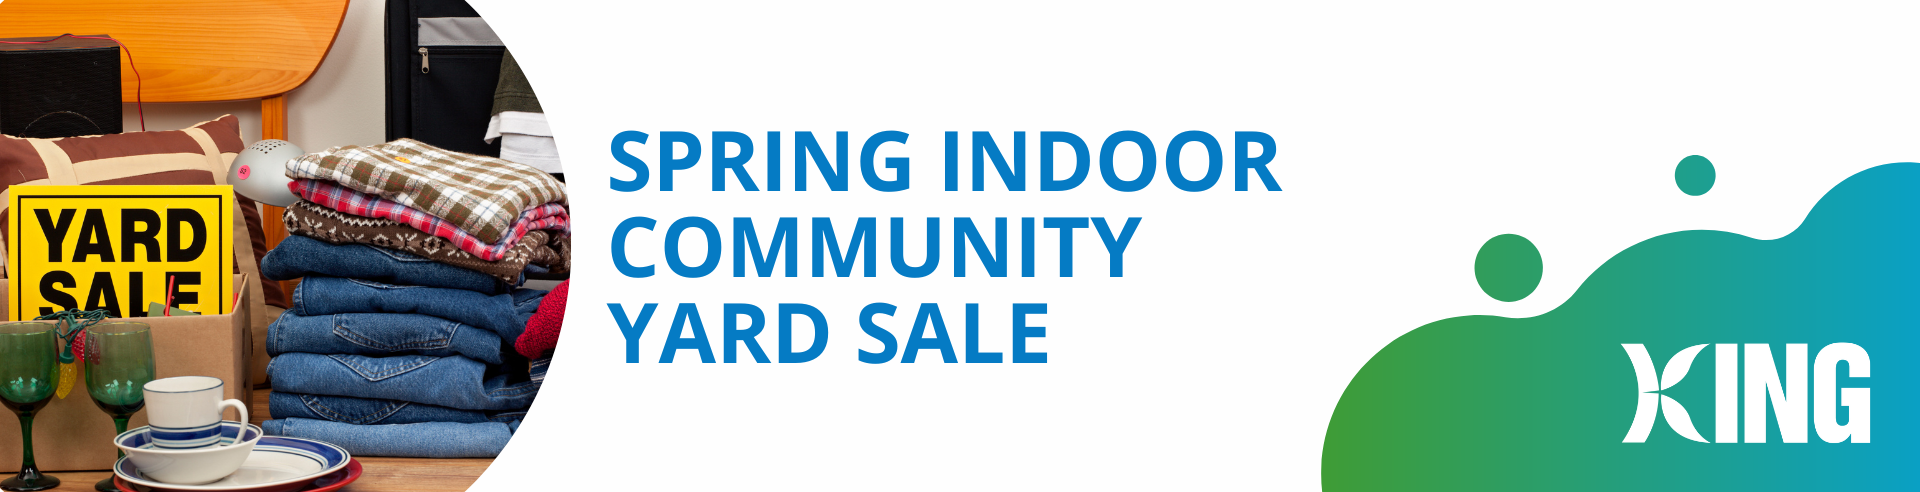 Spring Indoor Community Yard Sale